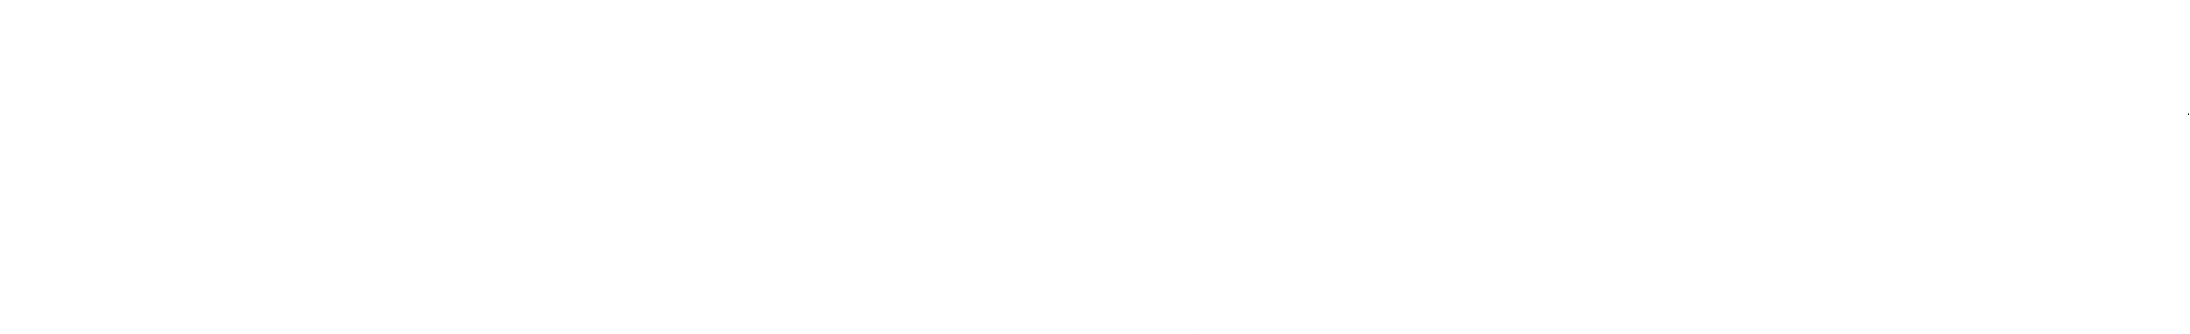 British Airways Logo Black And White - Johns Hopkins Logo White Clipart (2400x2400), Png Download